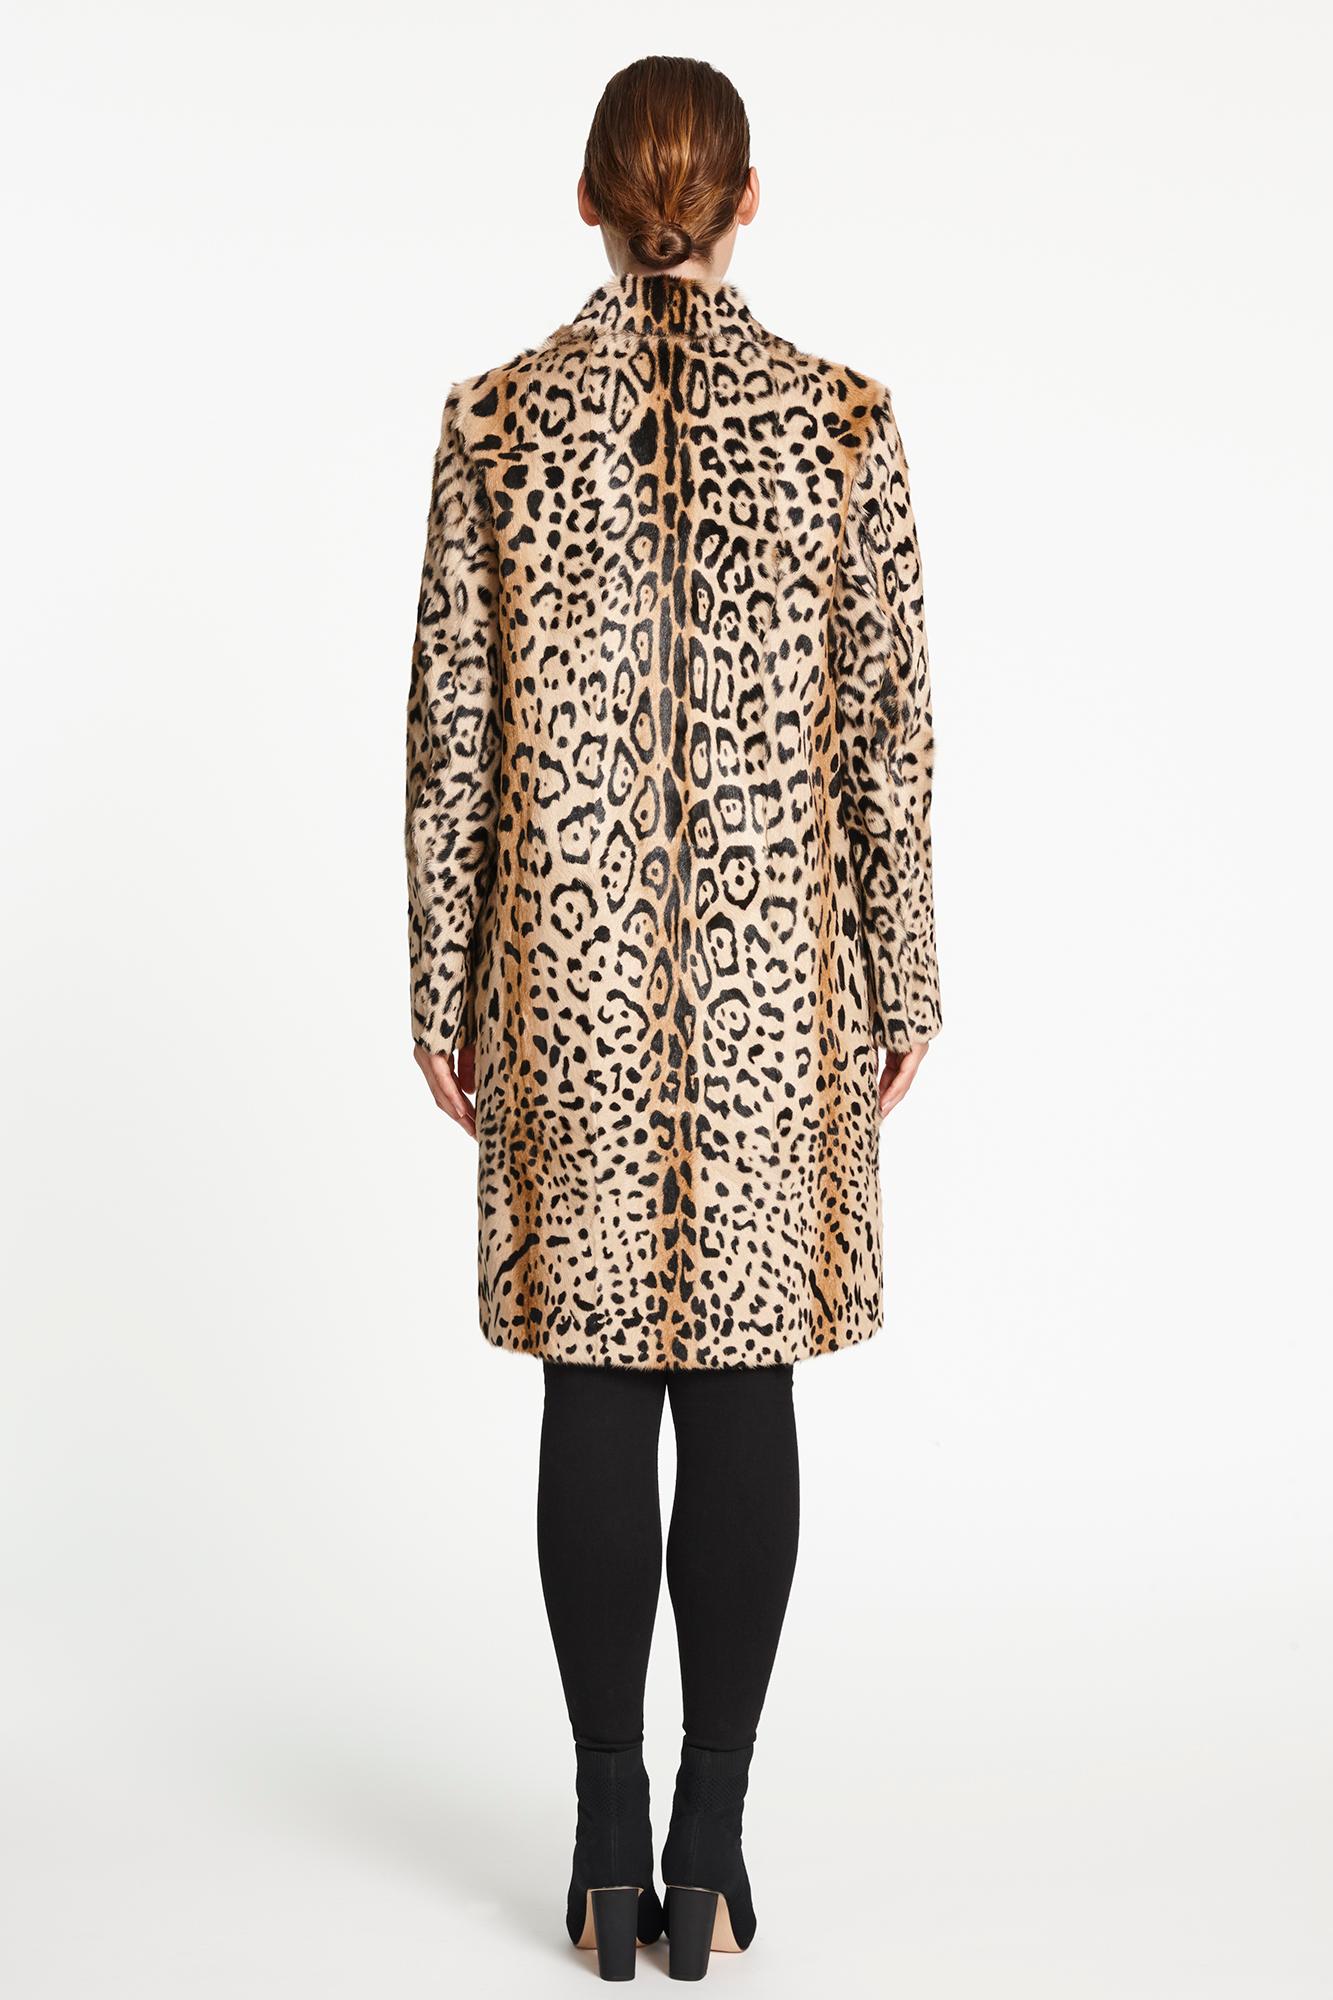 Verheyen London Leopard Print Coat in Natural Goat Hair Fur Size uk 8 4